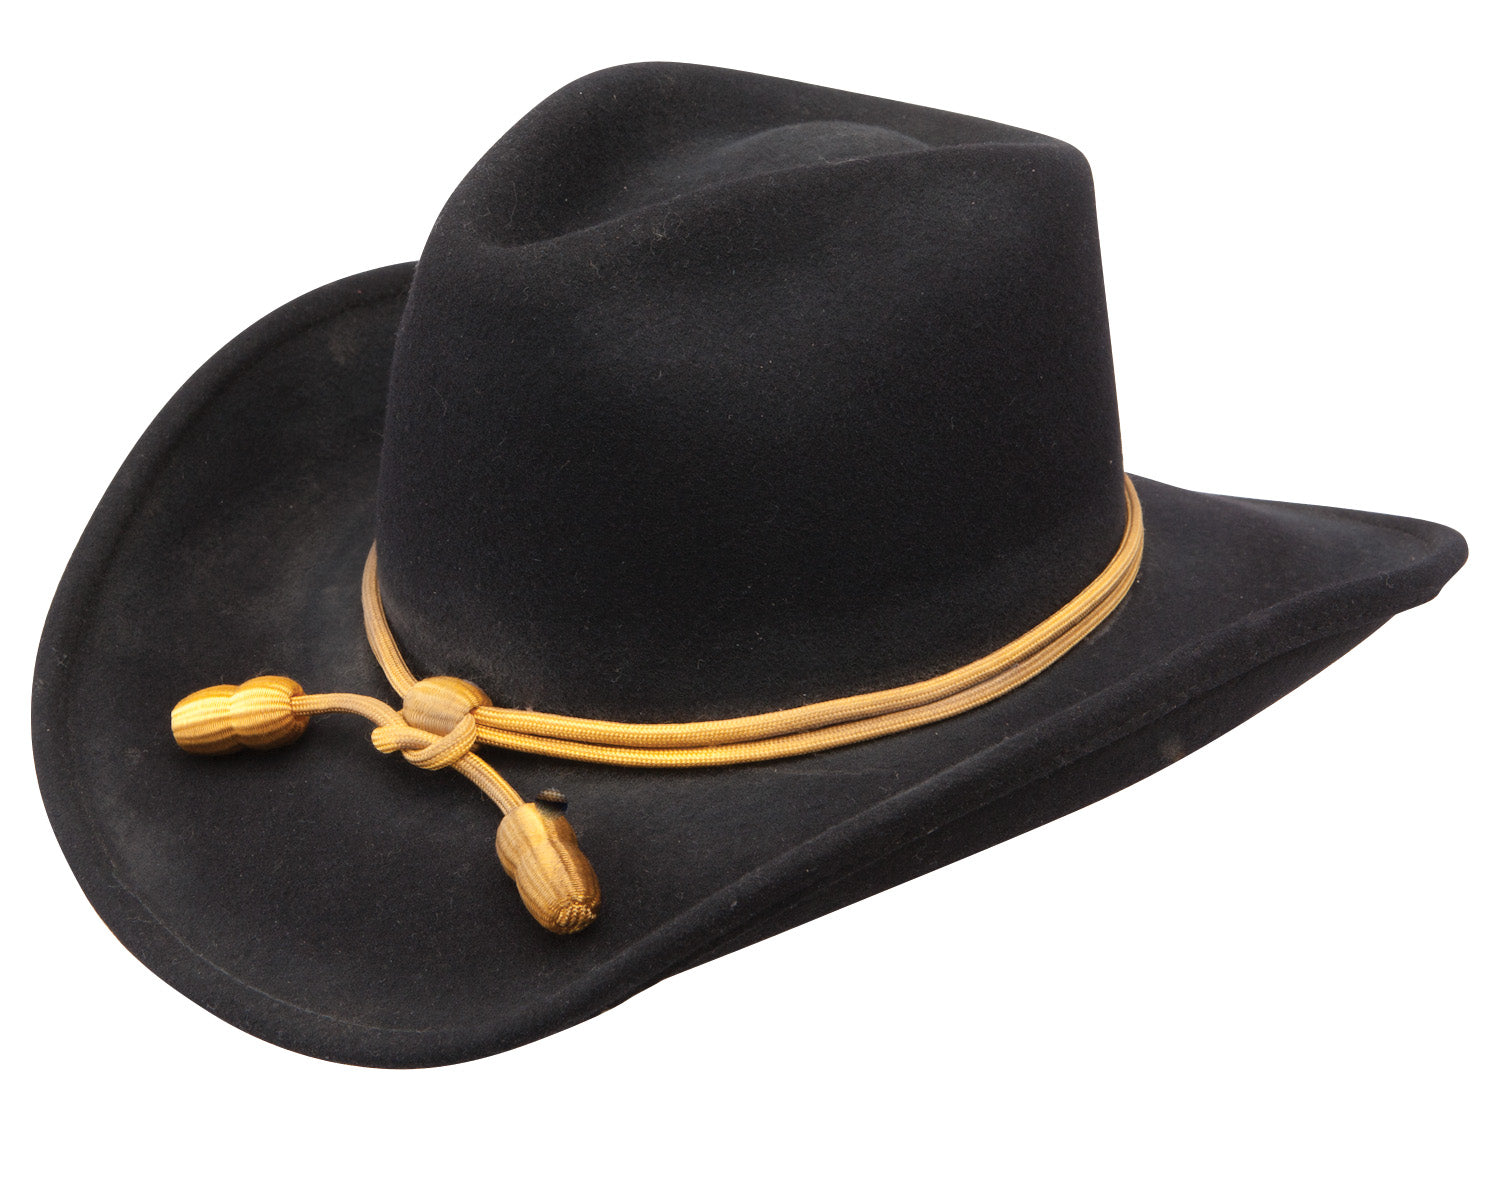 Stetson John Wayne Chinook Wool Felt Gambler Hat Size 7 1/8 Black